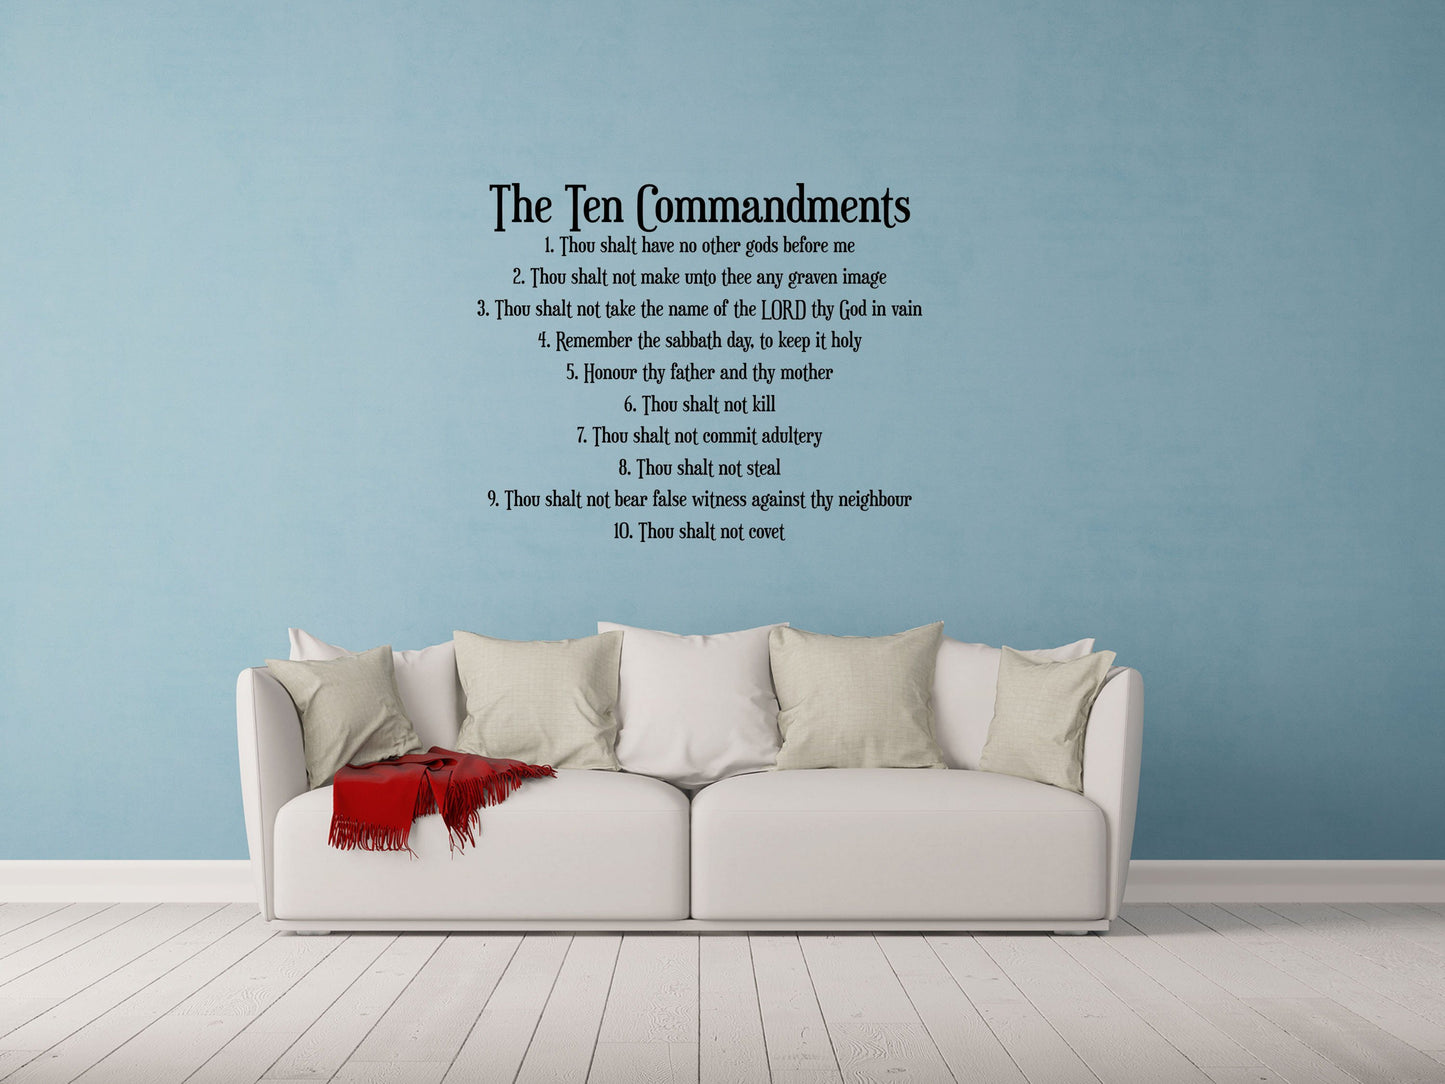 The 10 Commandments - Scripture Wall Decals Vinyl Wall Decal Inspirational Wall Signs 